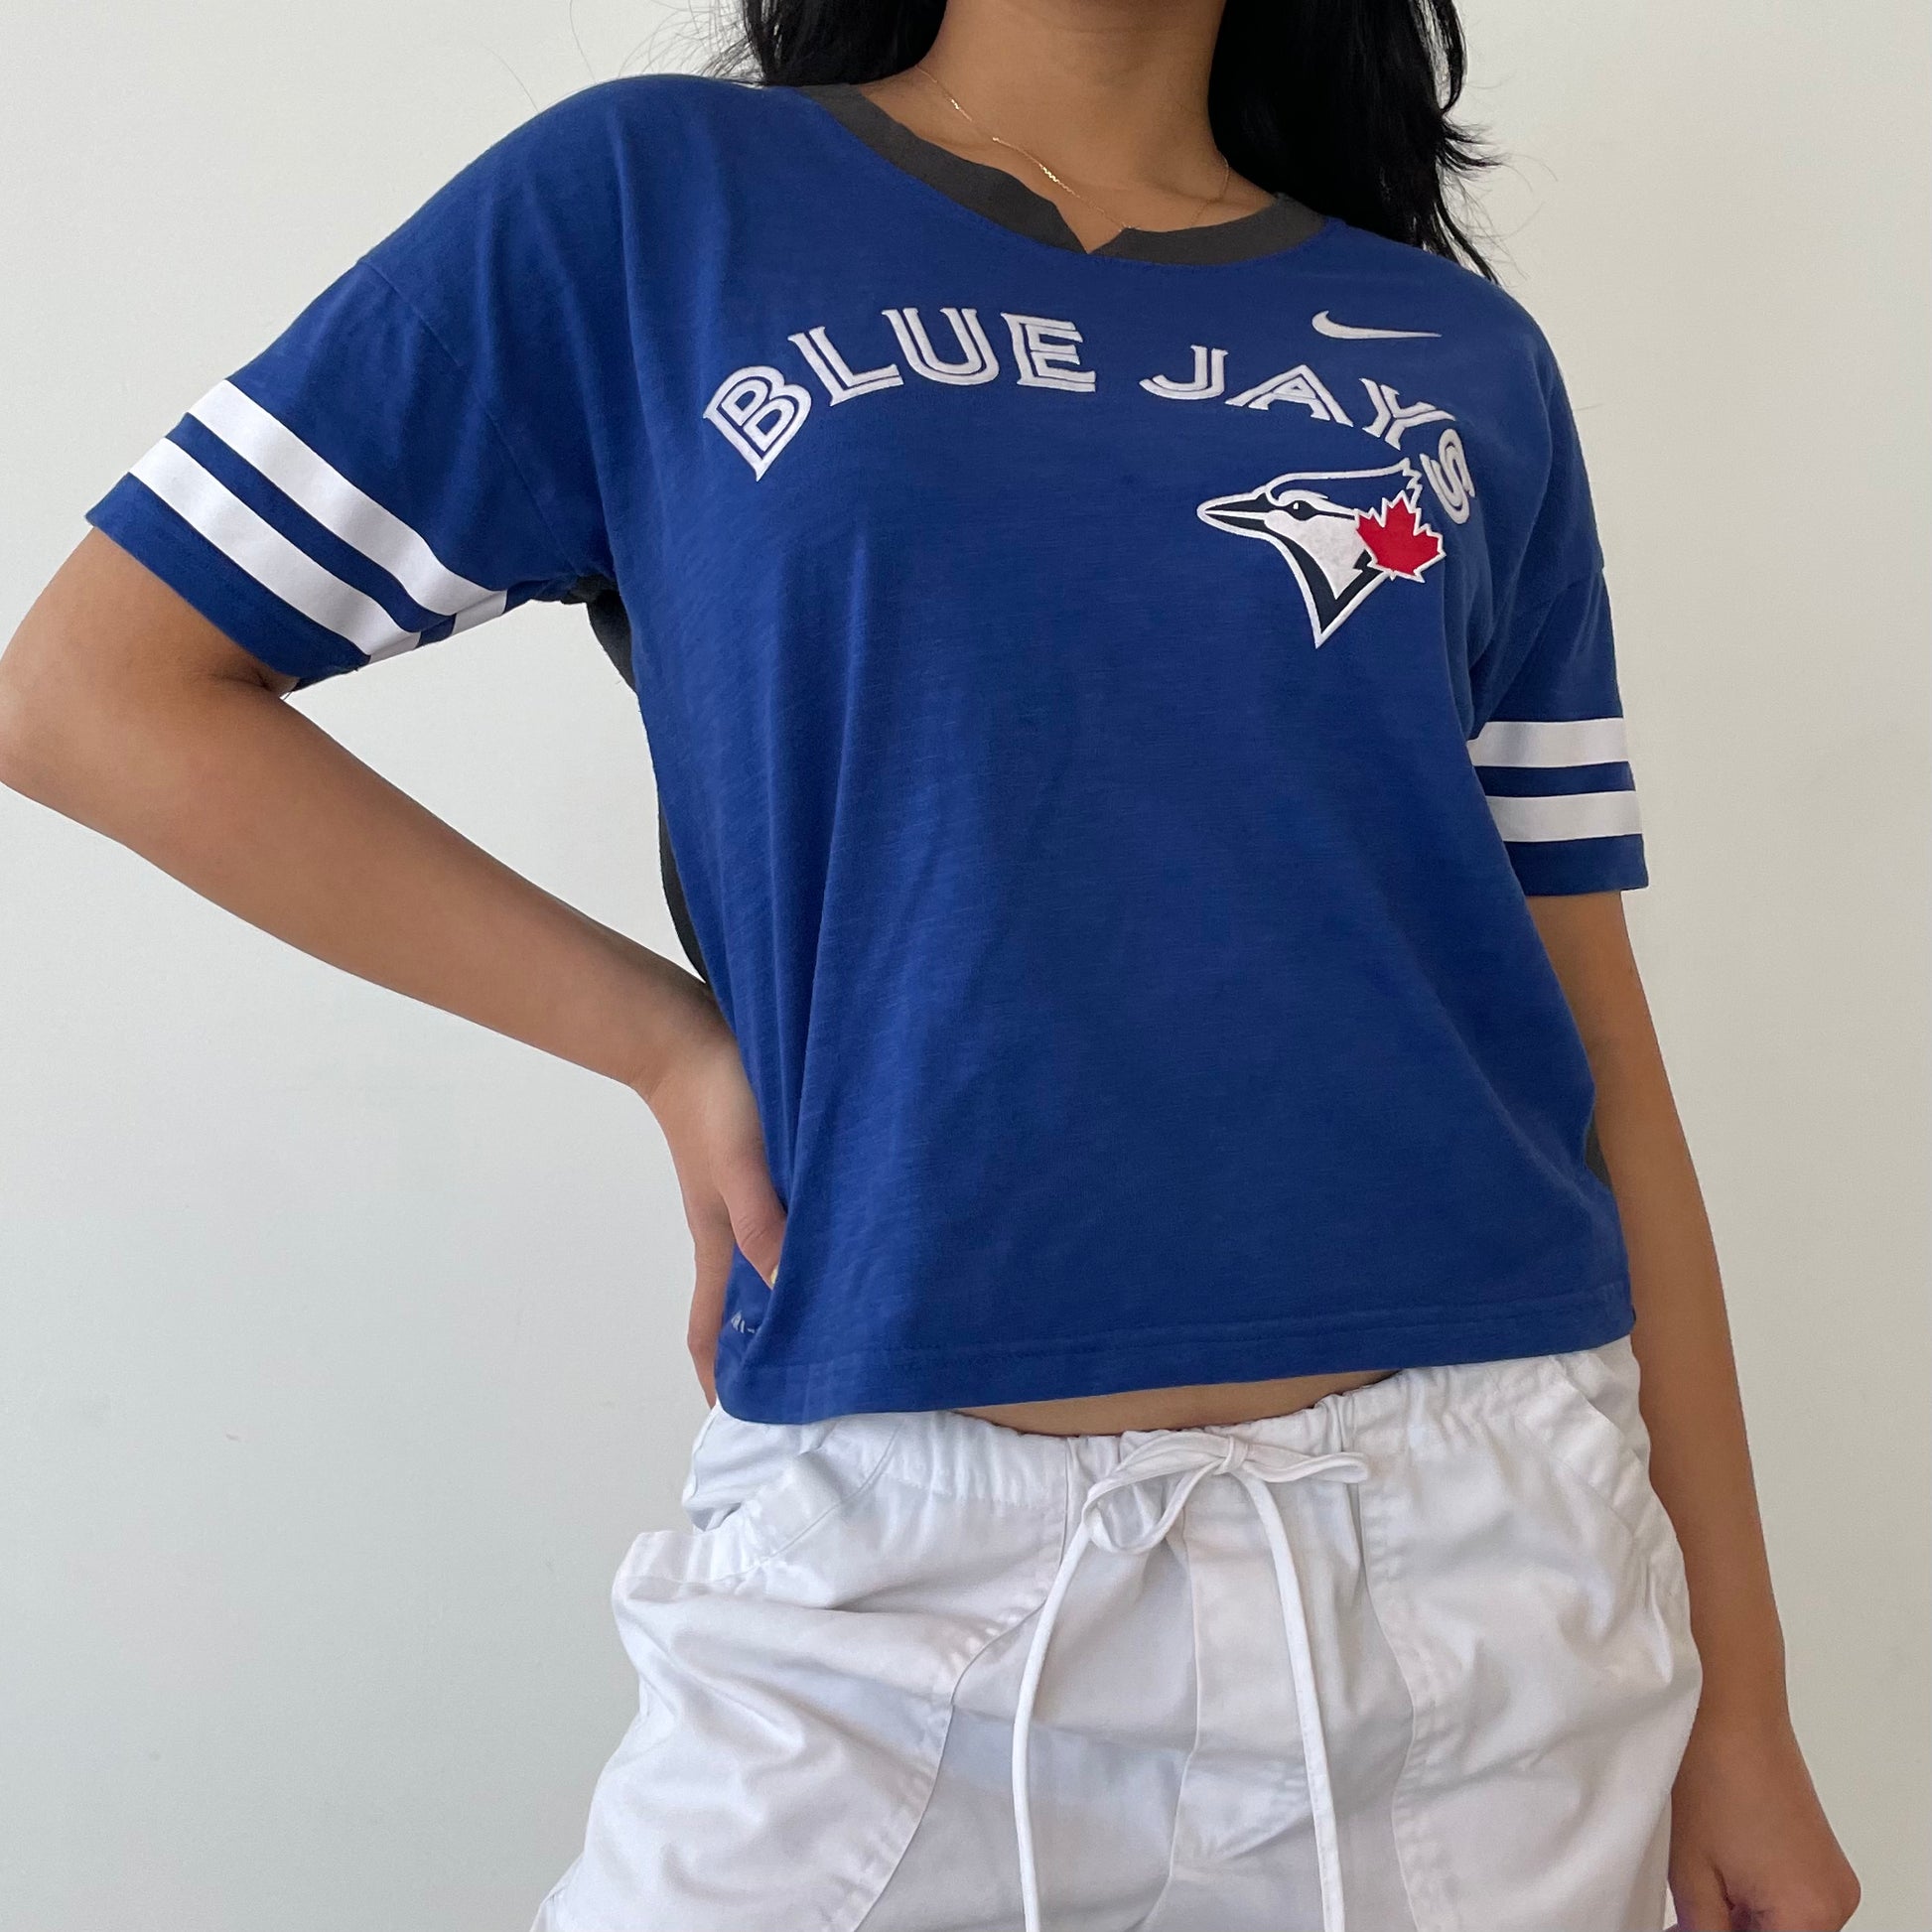 Nike Toronto Blue Jays Short Sleeve Women’s Jersey - X-Small